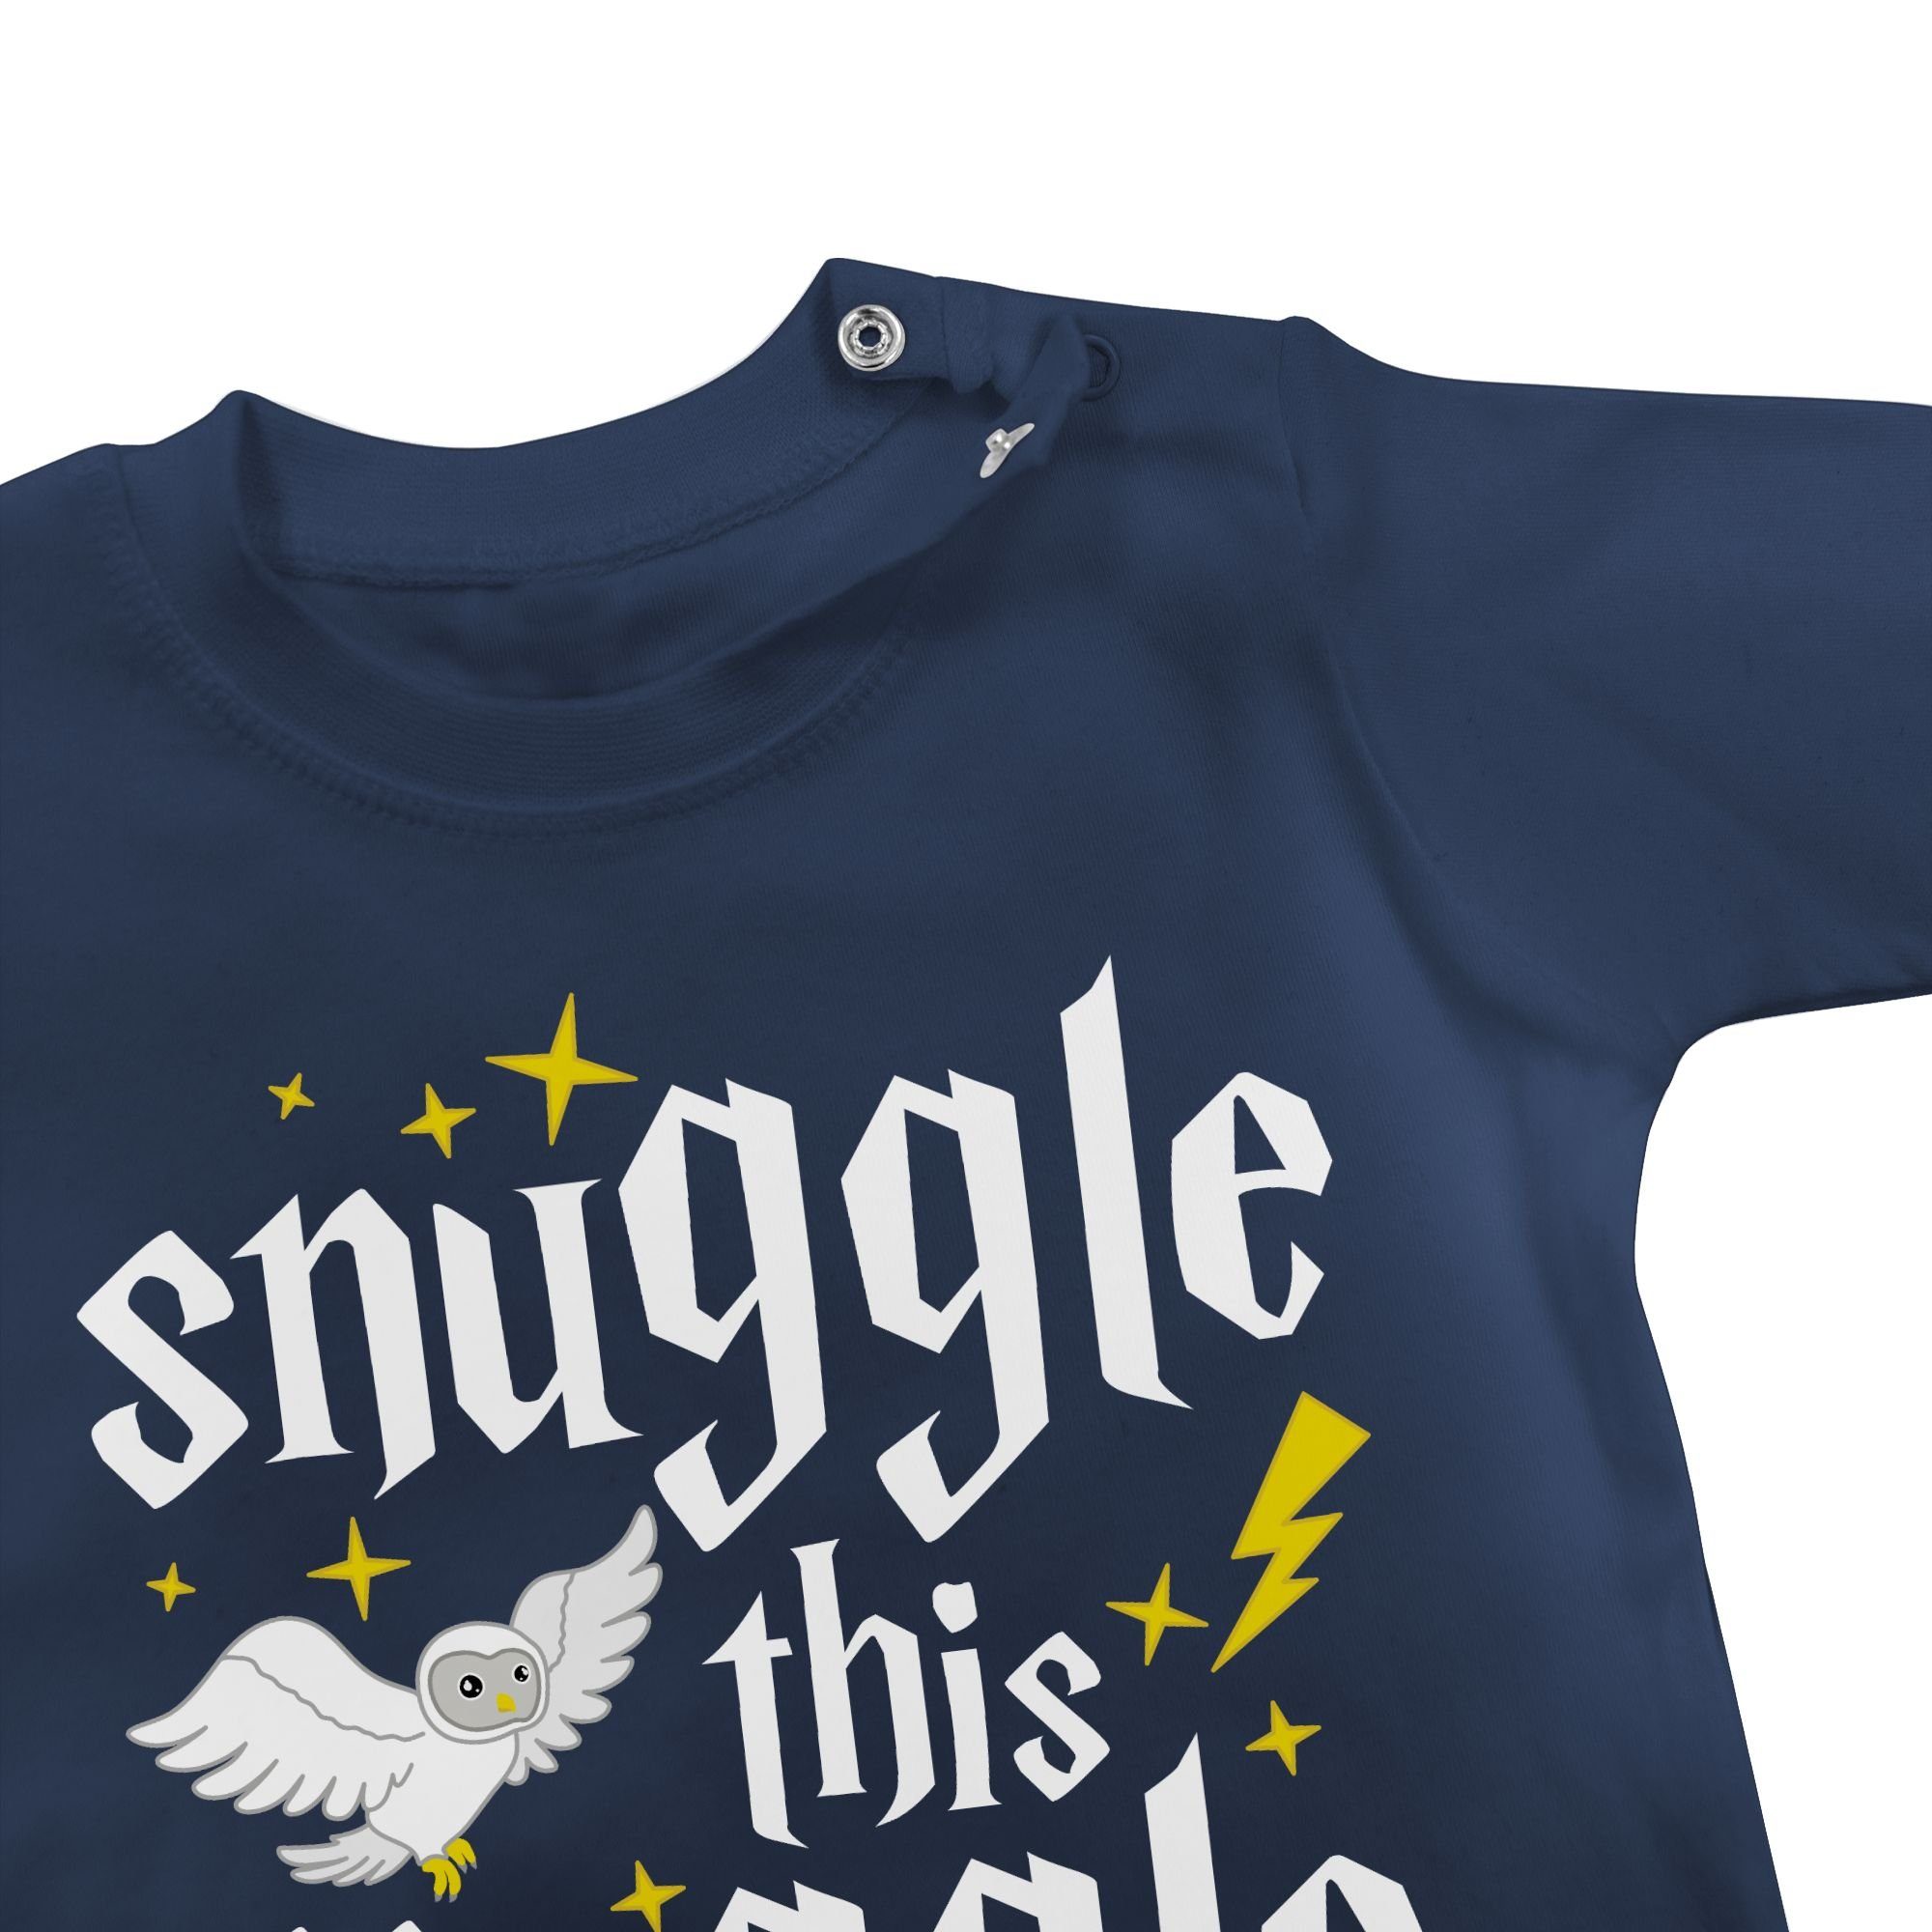 Shirtracer T-Shirt Snuggle This Muggle Harry & Mädchen Baby Navy 2 Blau Junge Strampler